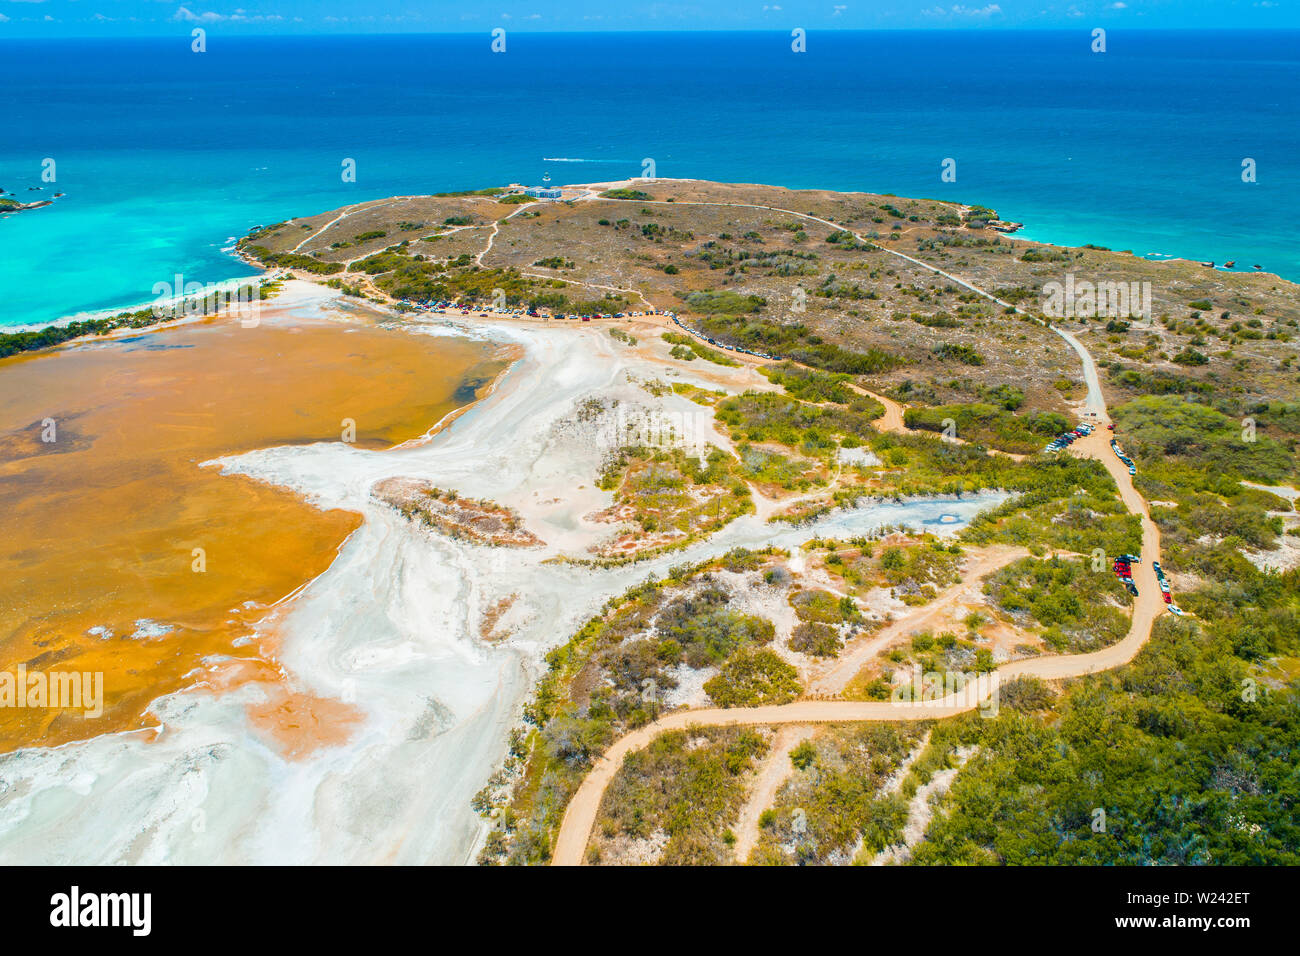 Aerial view of Puerto Rico. Faro Los Morrillos de Cabo Rojo. Playa Sucia beach and Salt lakes in Punta Jaguey. Stock Photo